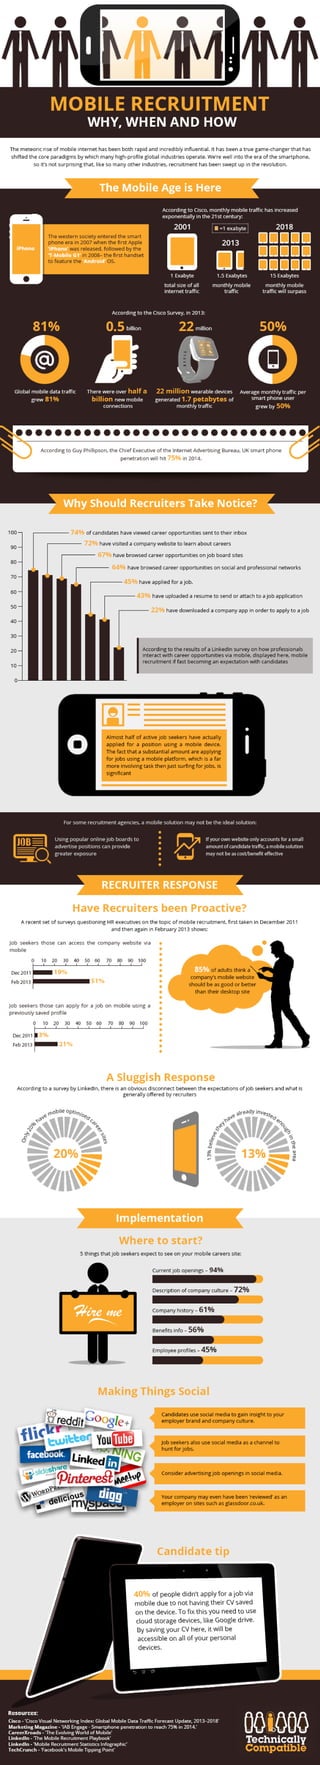 Infographic - Mobile Recruitment